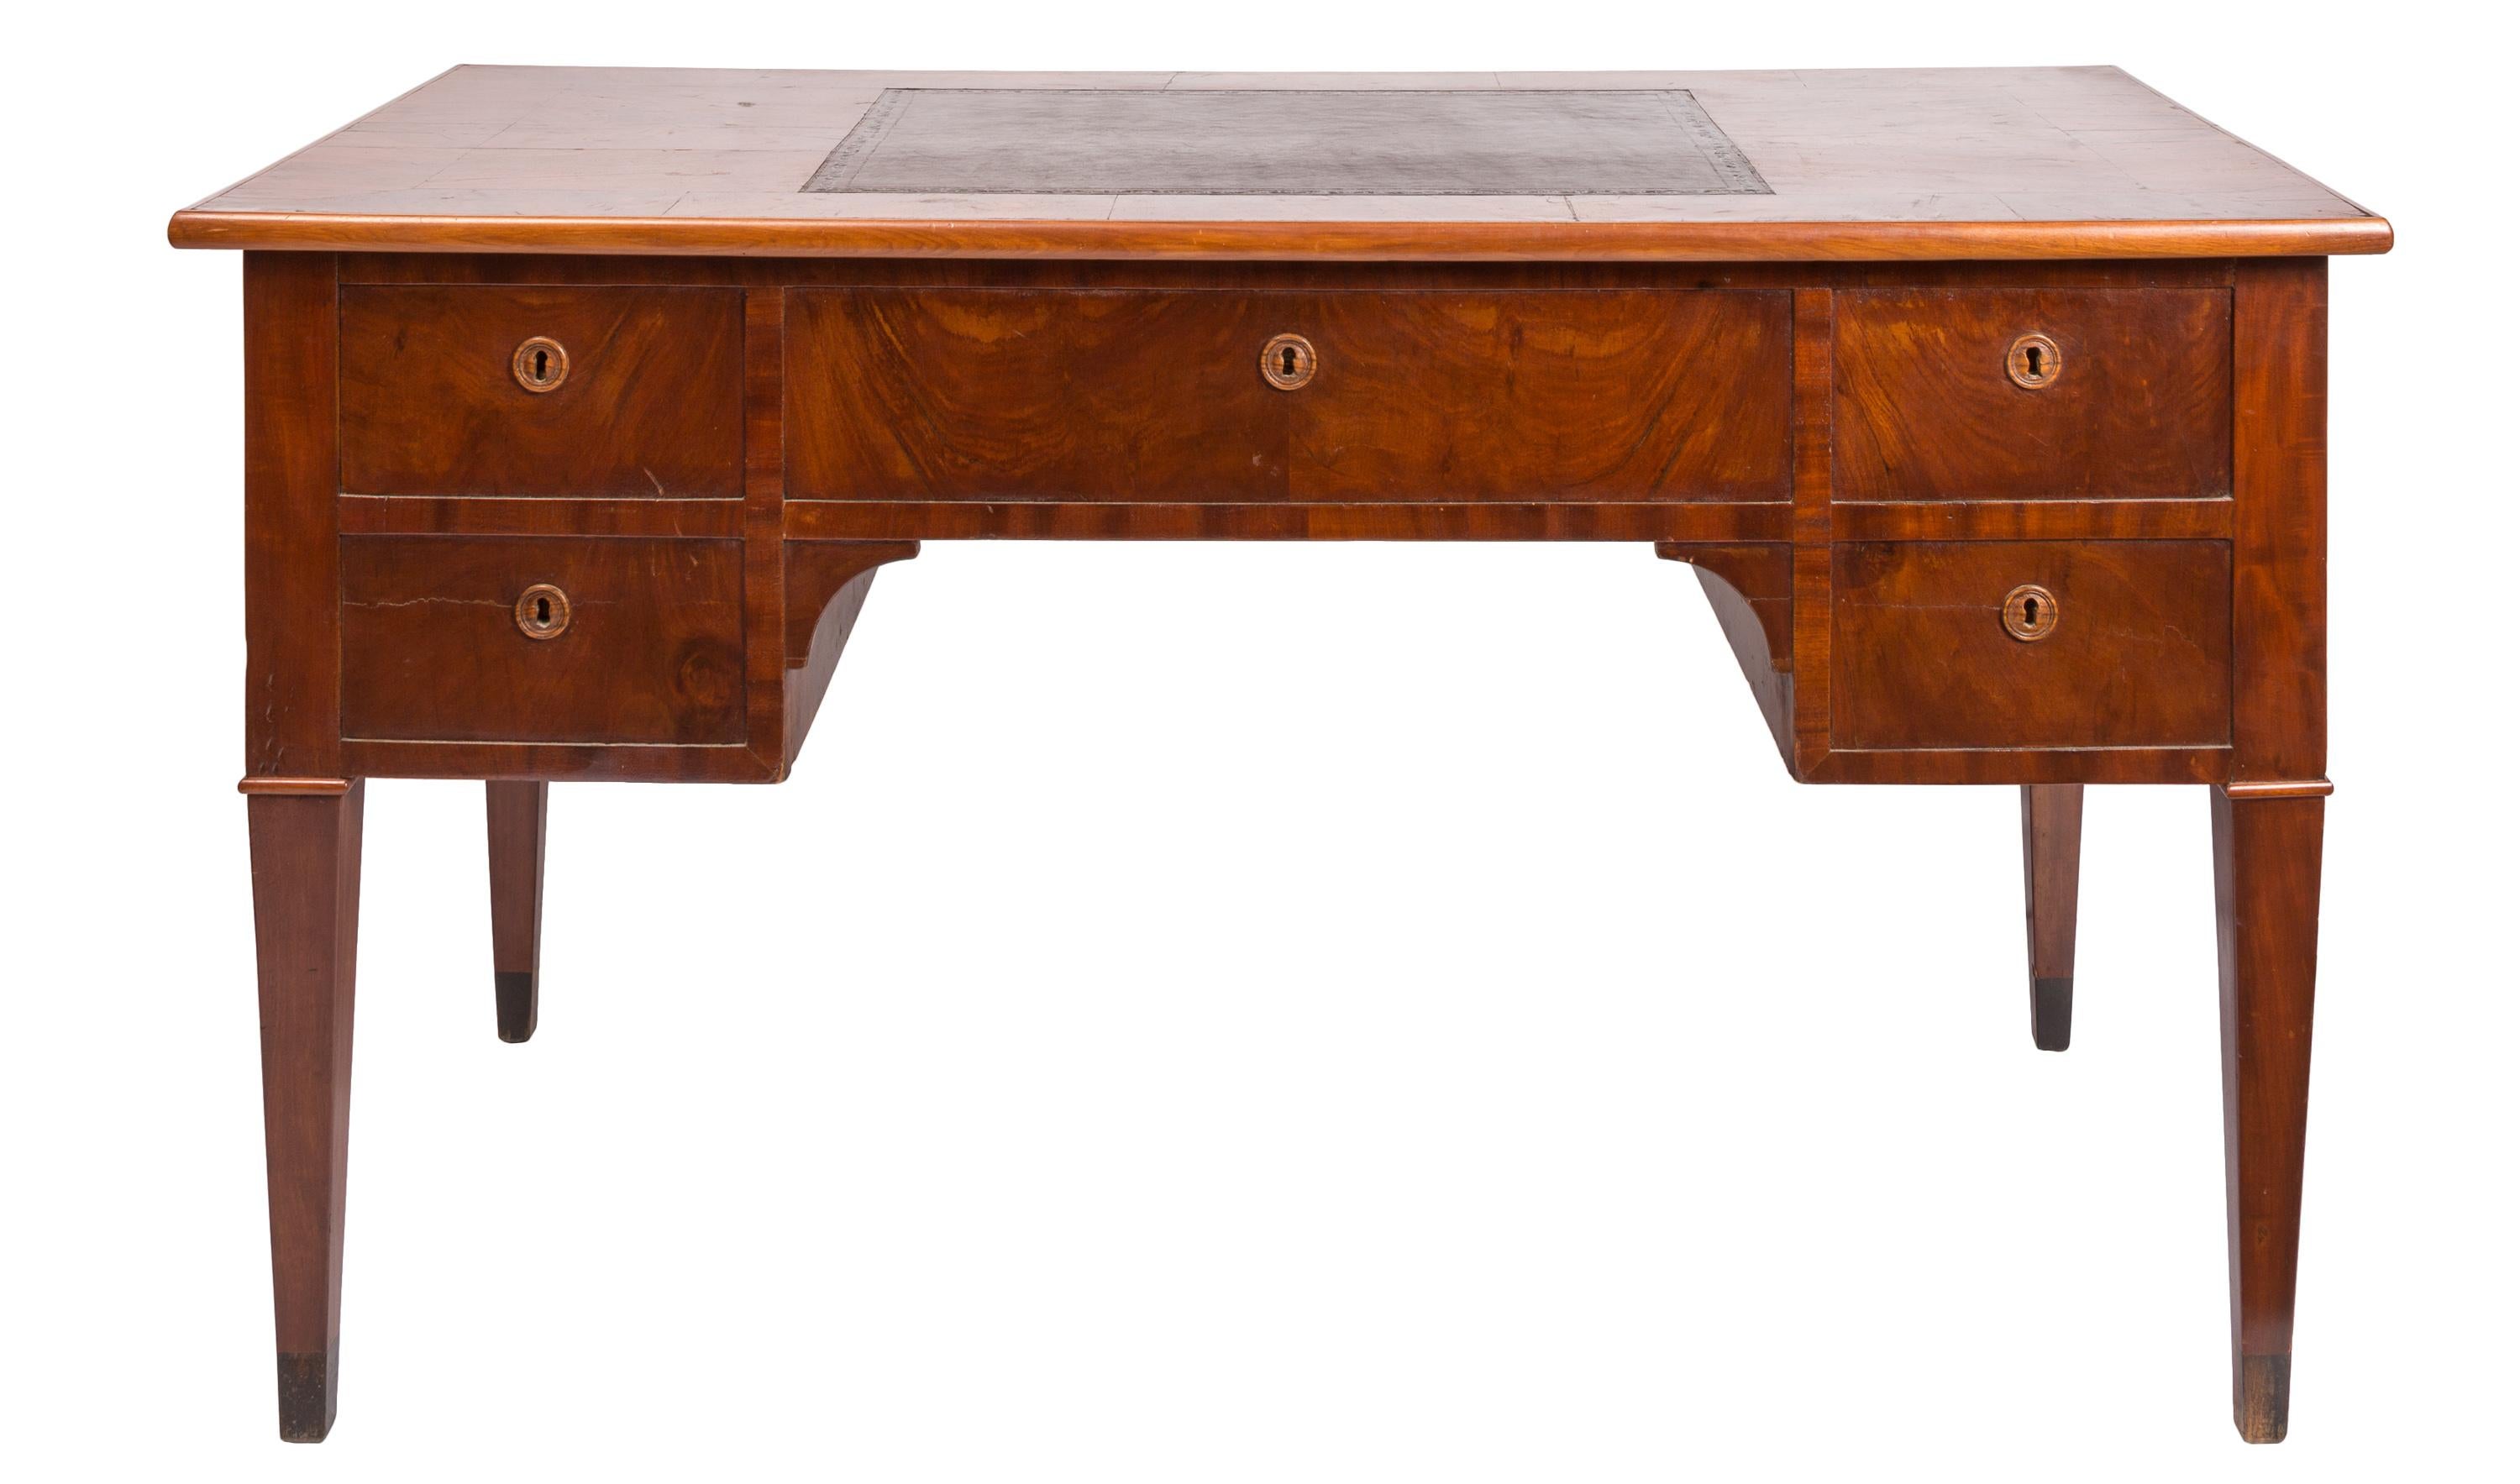 British 19th Century English Writing Desk, Partner Style, Leather Top, Wood Grain Veneer For Sale